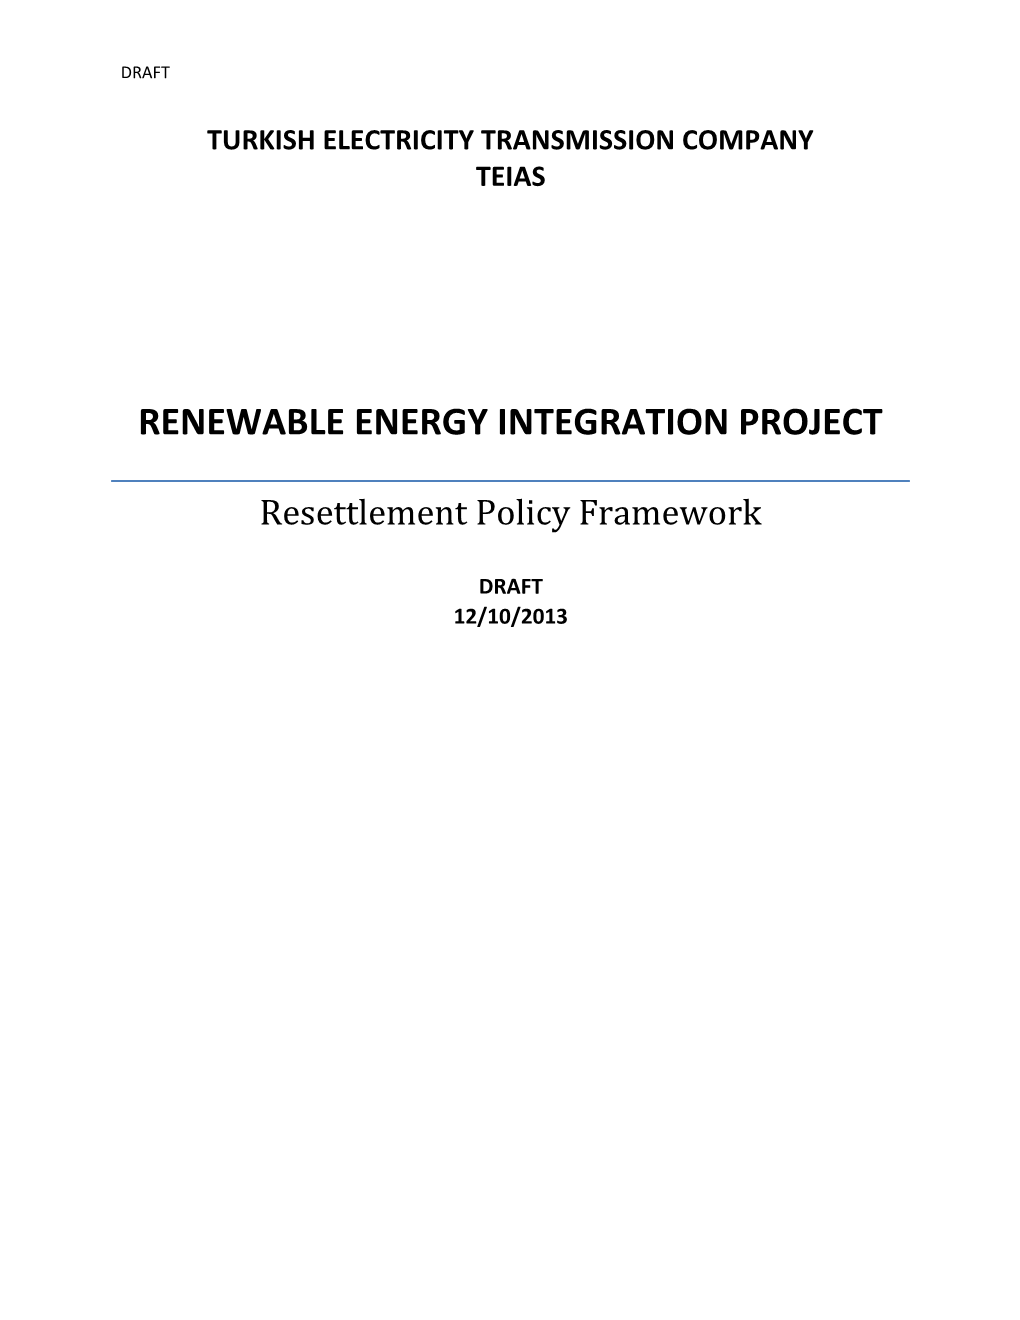 Renewable Energy Integration Project